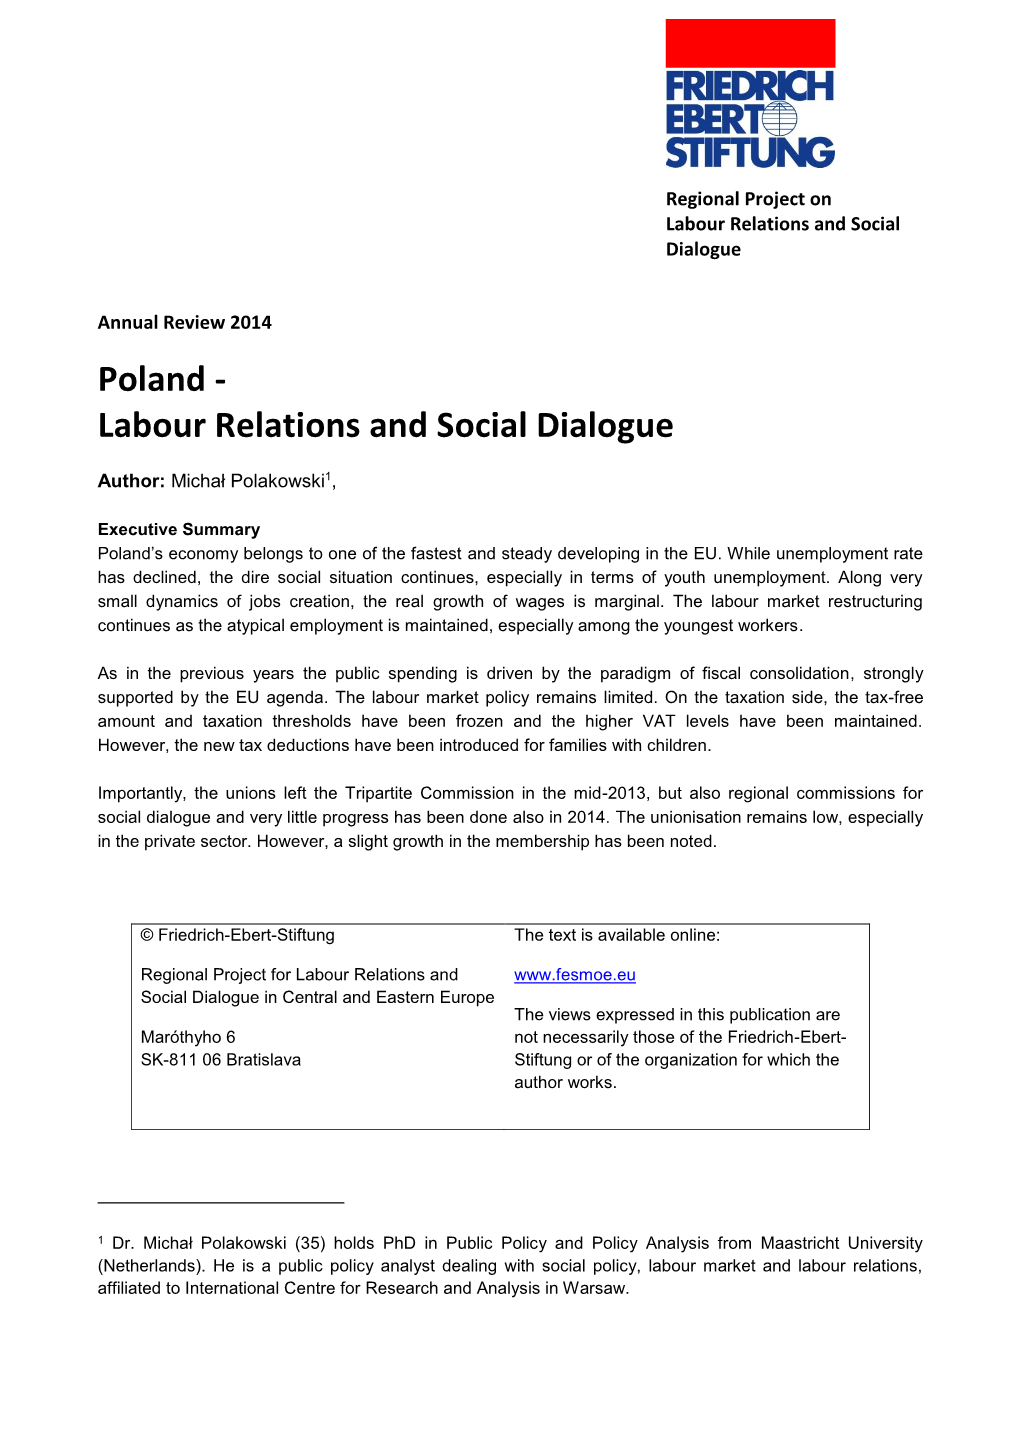 Poland - Labour Relations and Social Dialogue